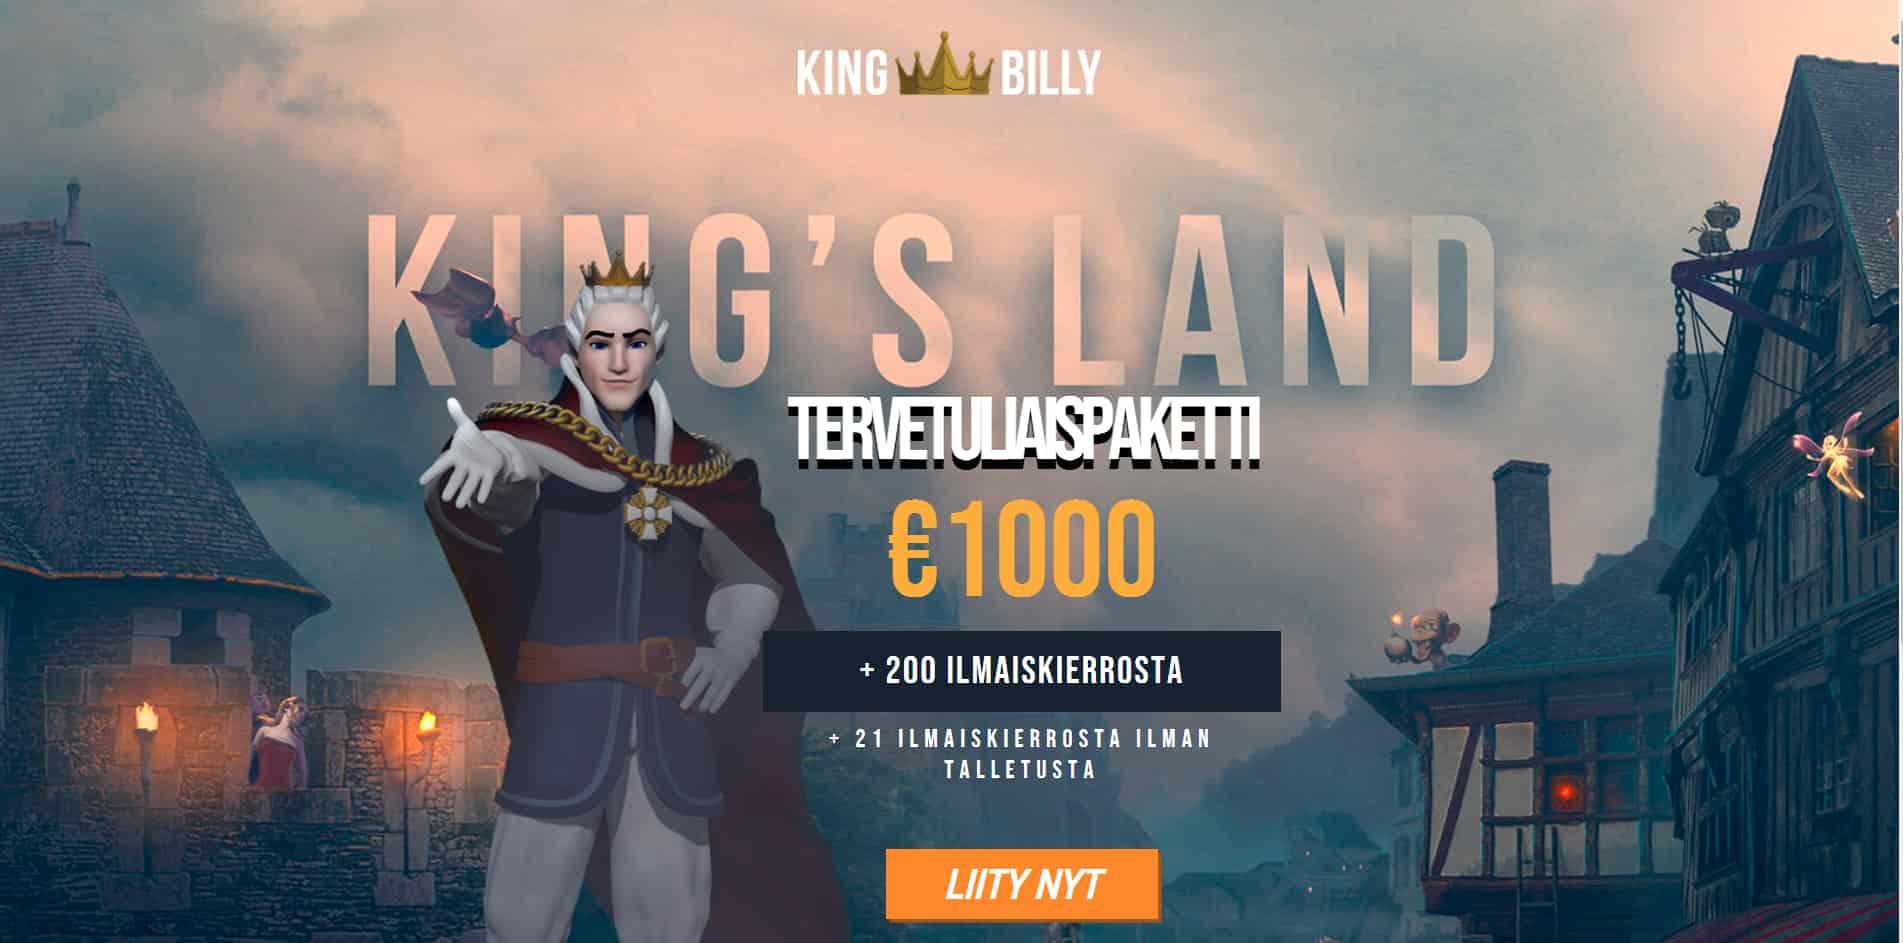 KingBilly casino homepage